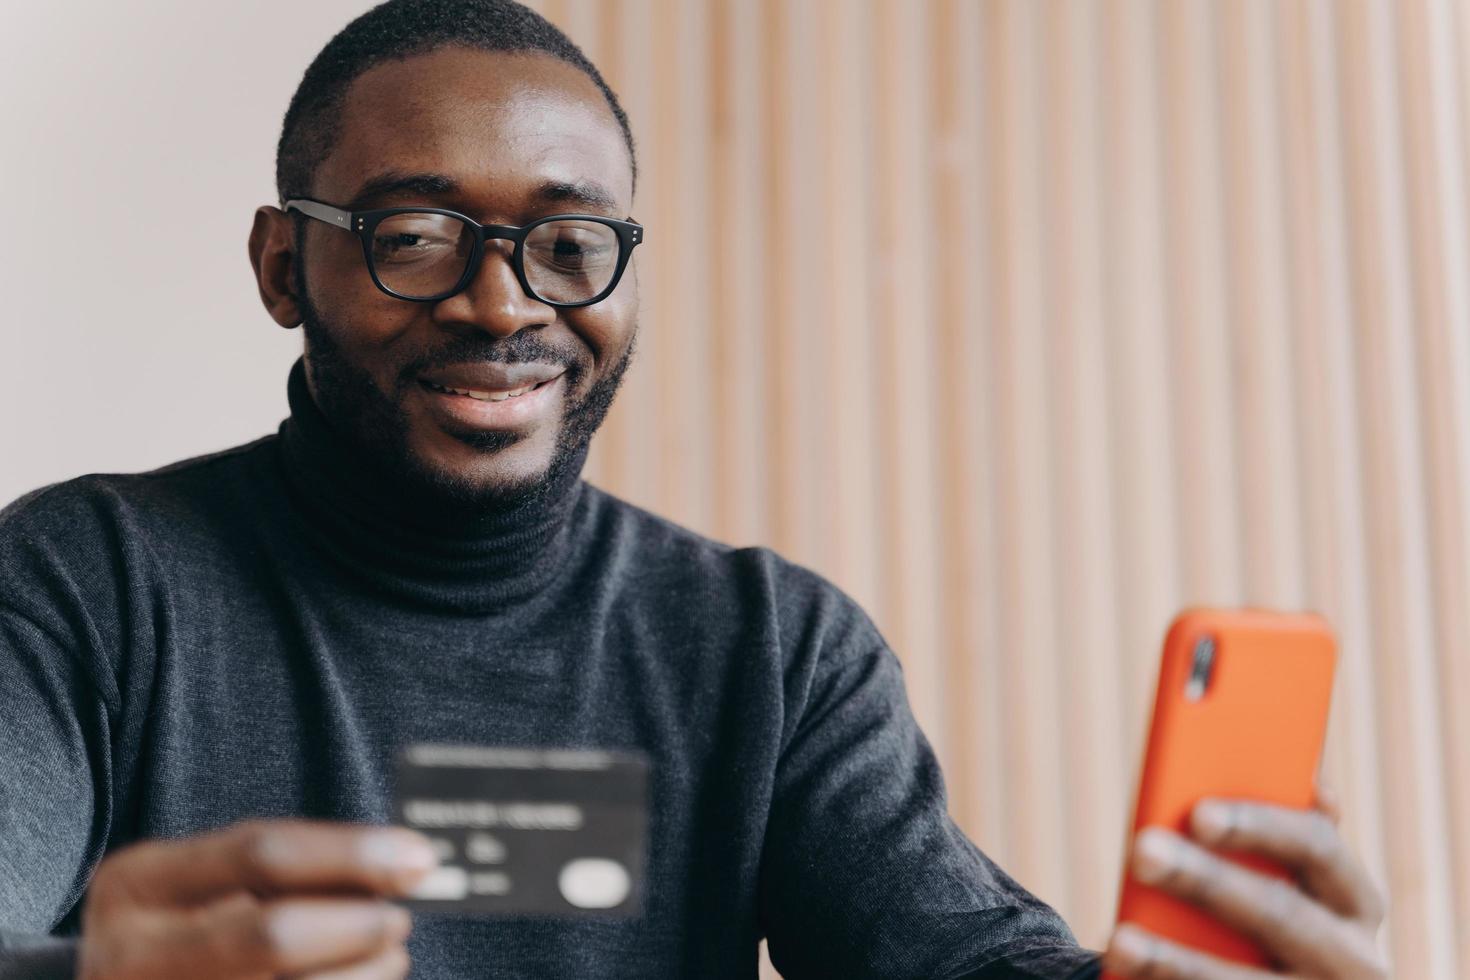 ung positiv afrikansk etnicitet man entreprenör i glasögon som betalar med kreditkort online foto